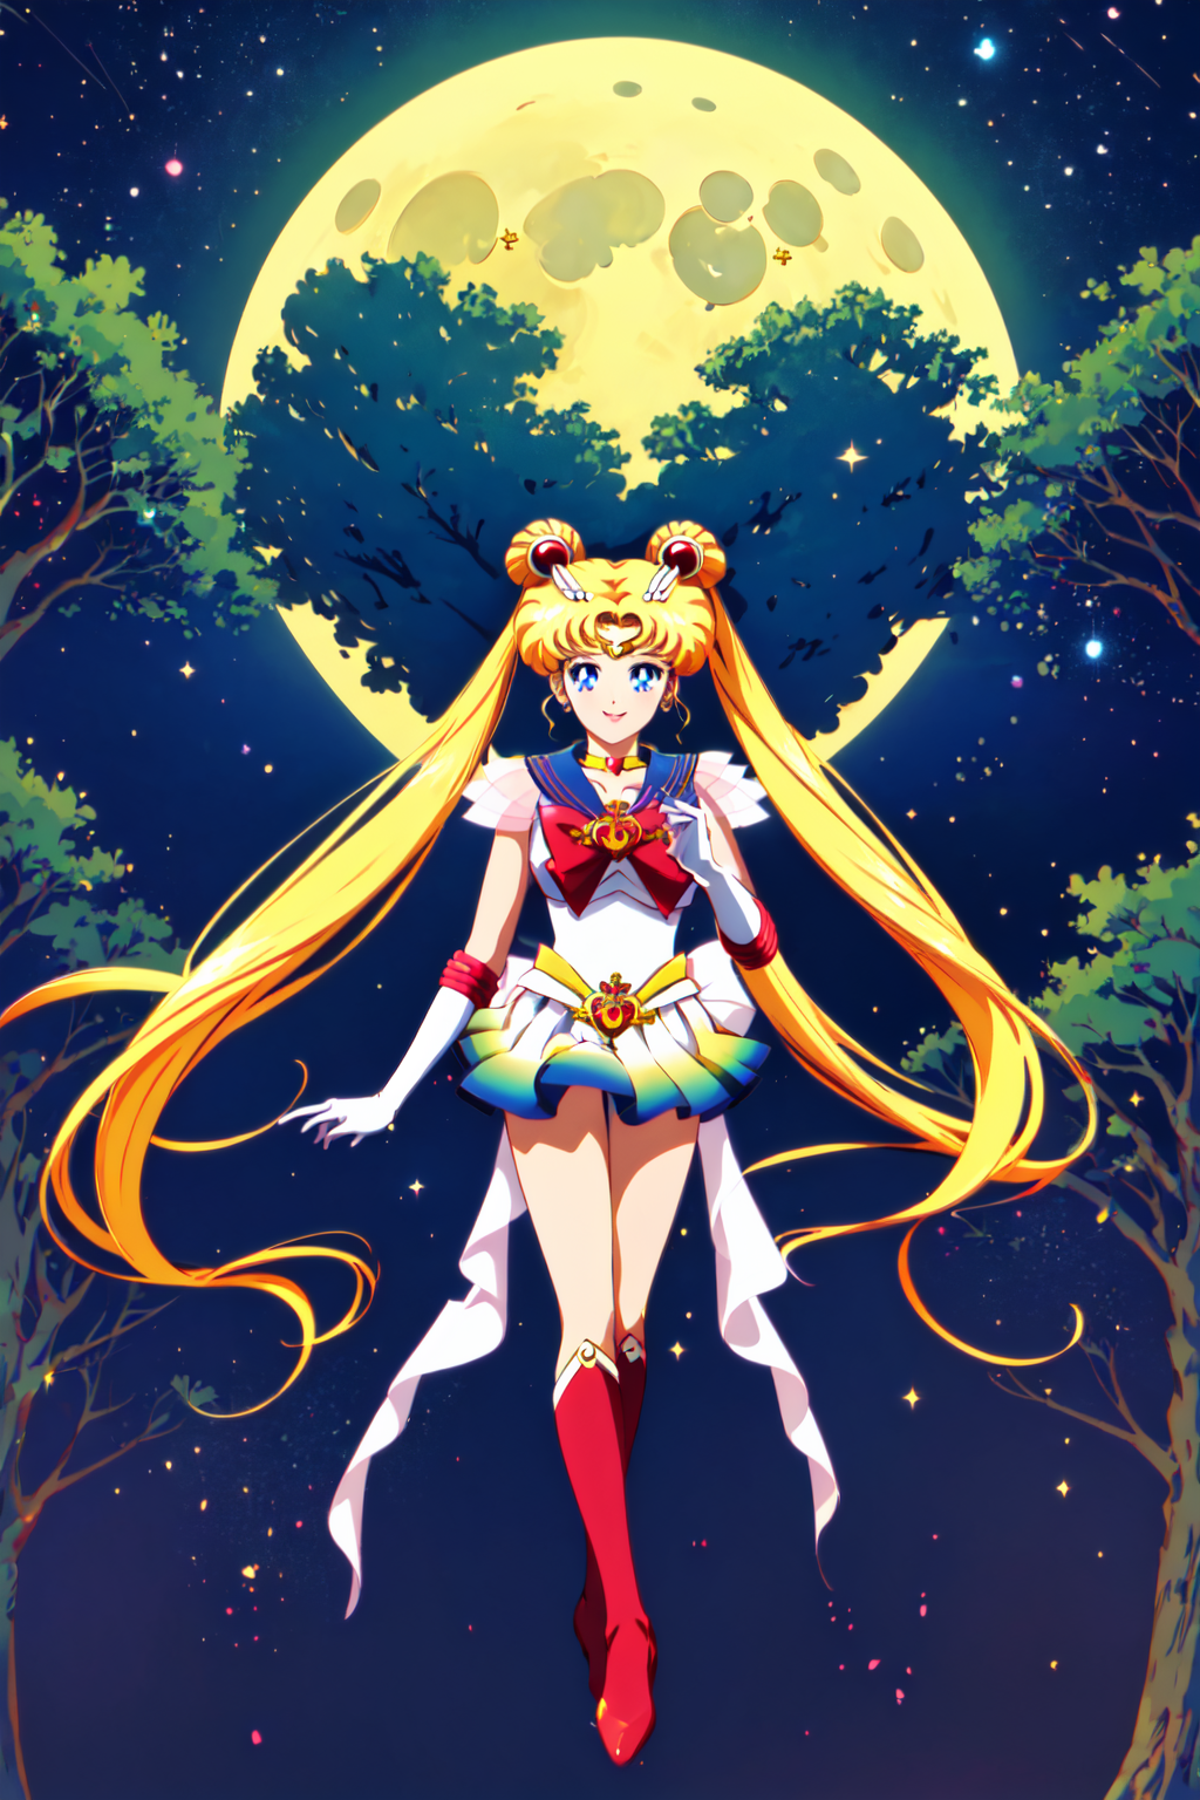 Super Sailor Moon LoRa image by duskfallcrew